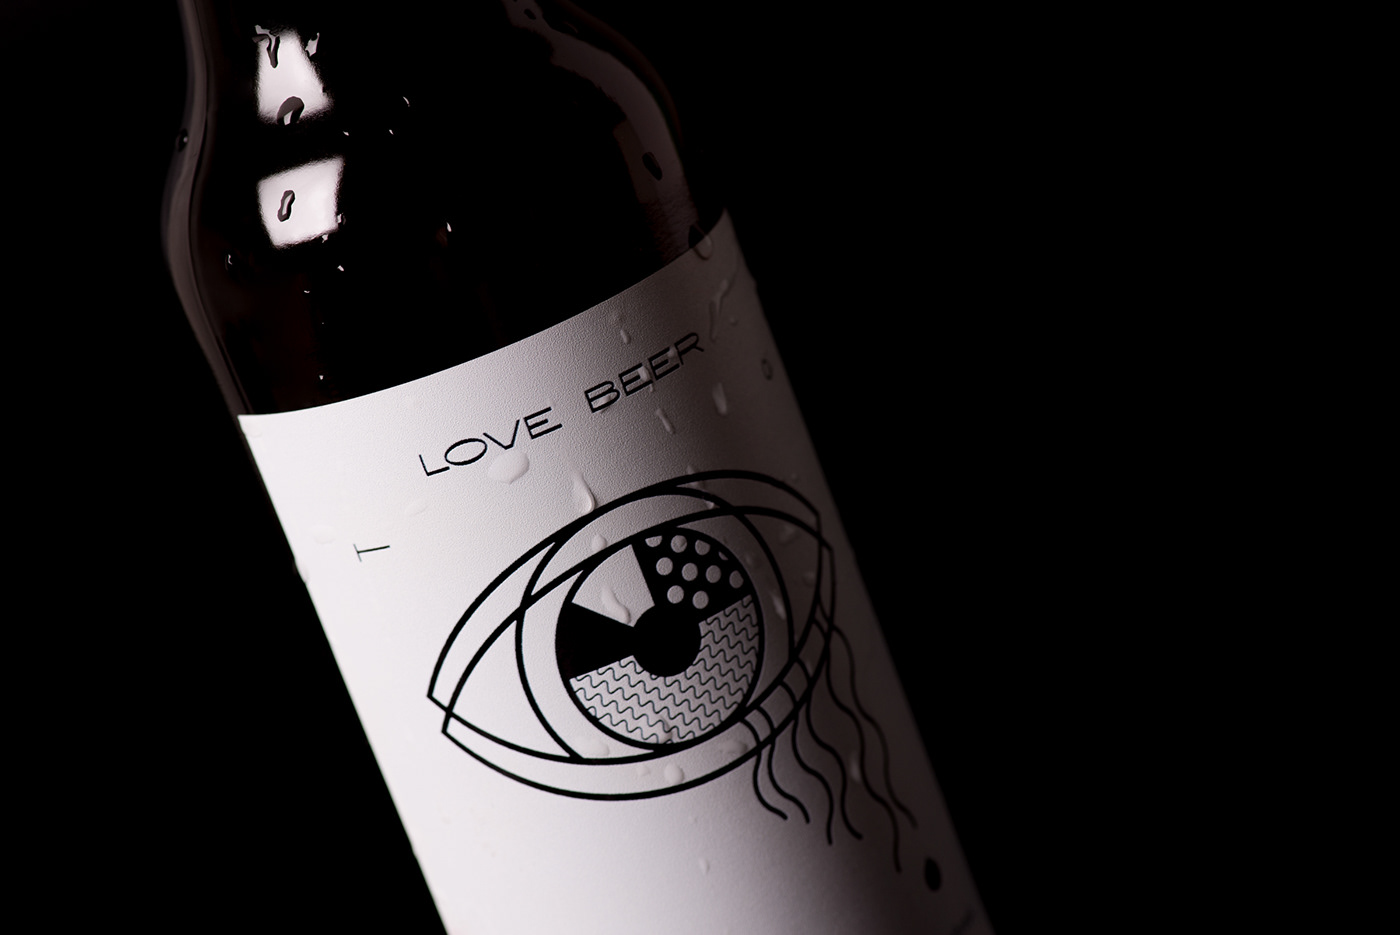 beer Love Label brand heartbreak friendship kiss black and white Monochromatic bewerage